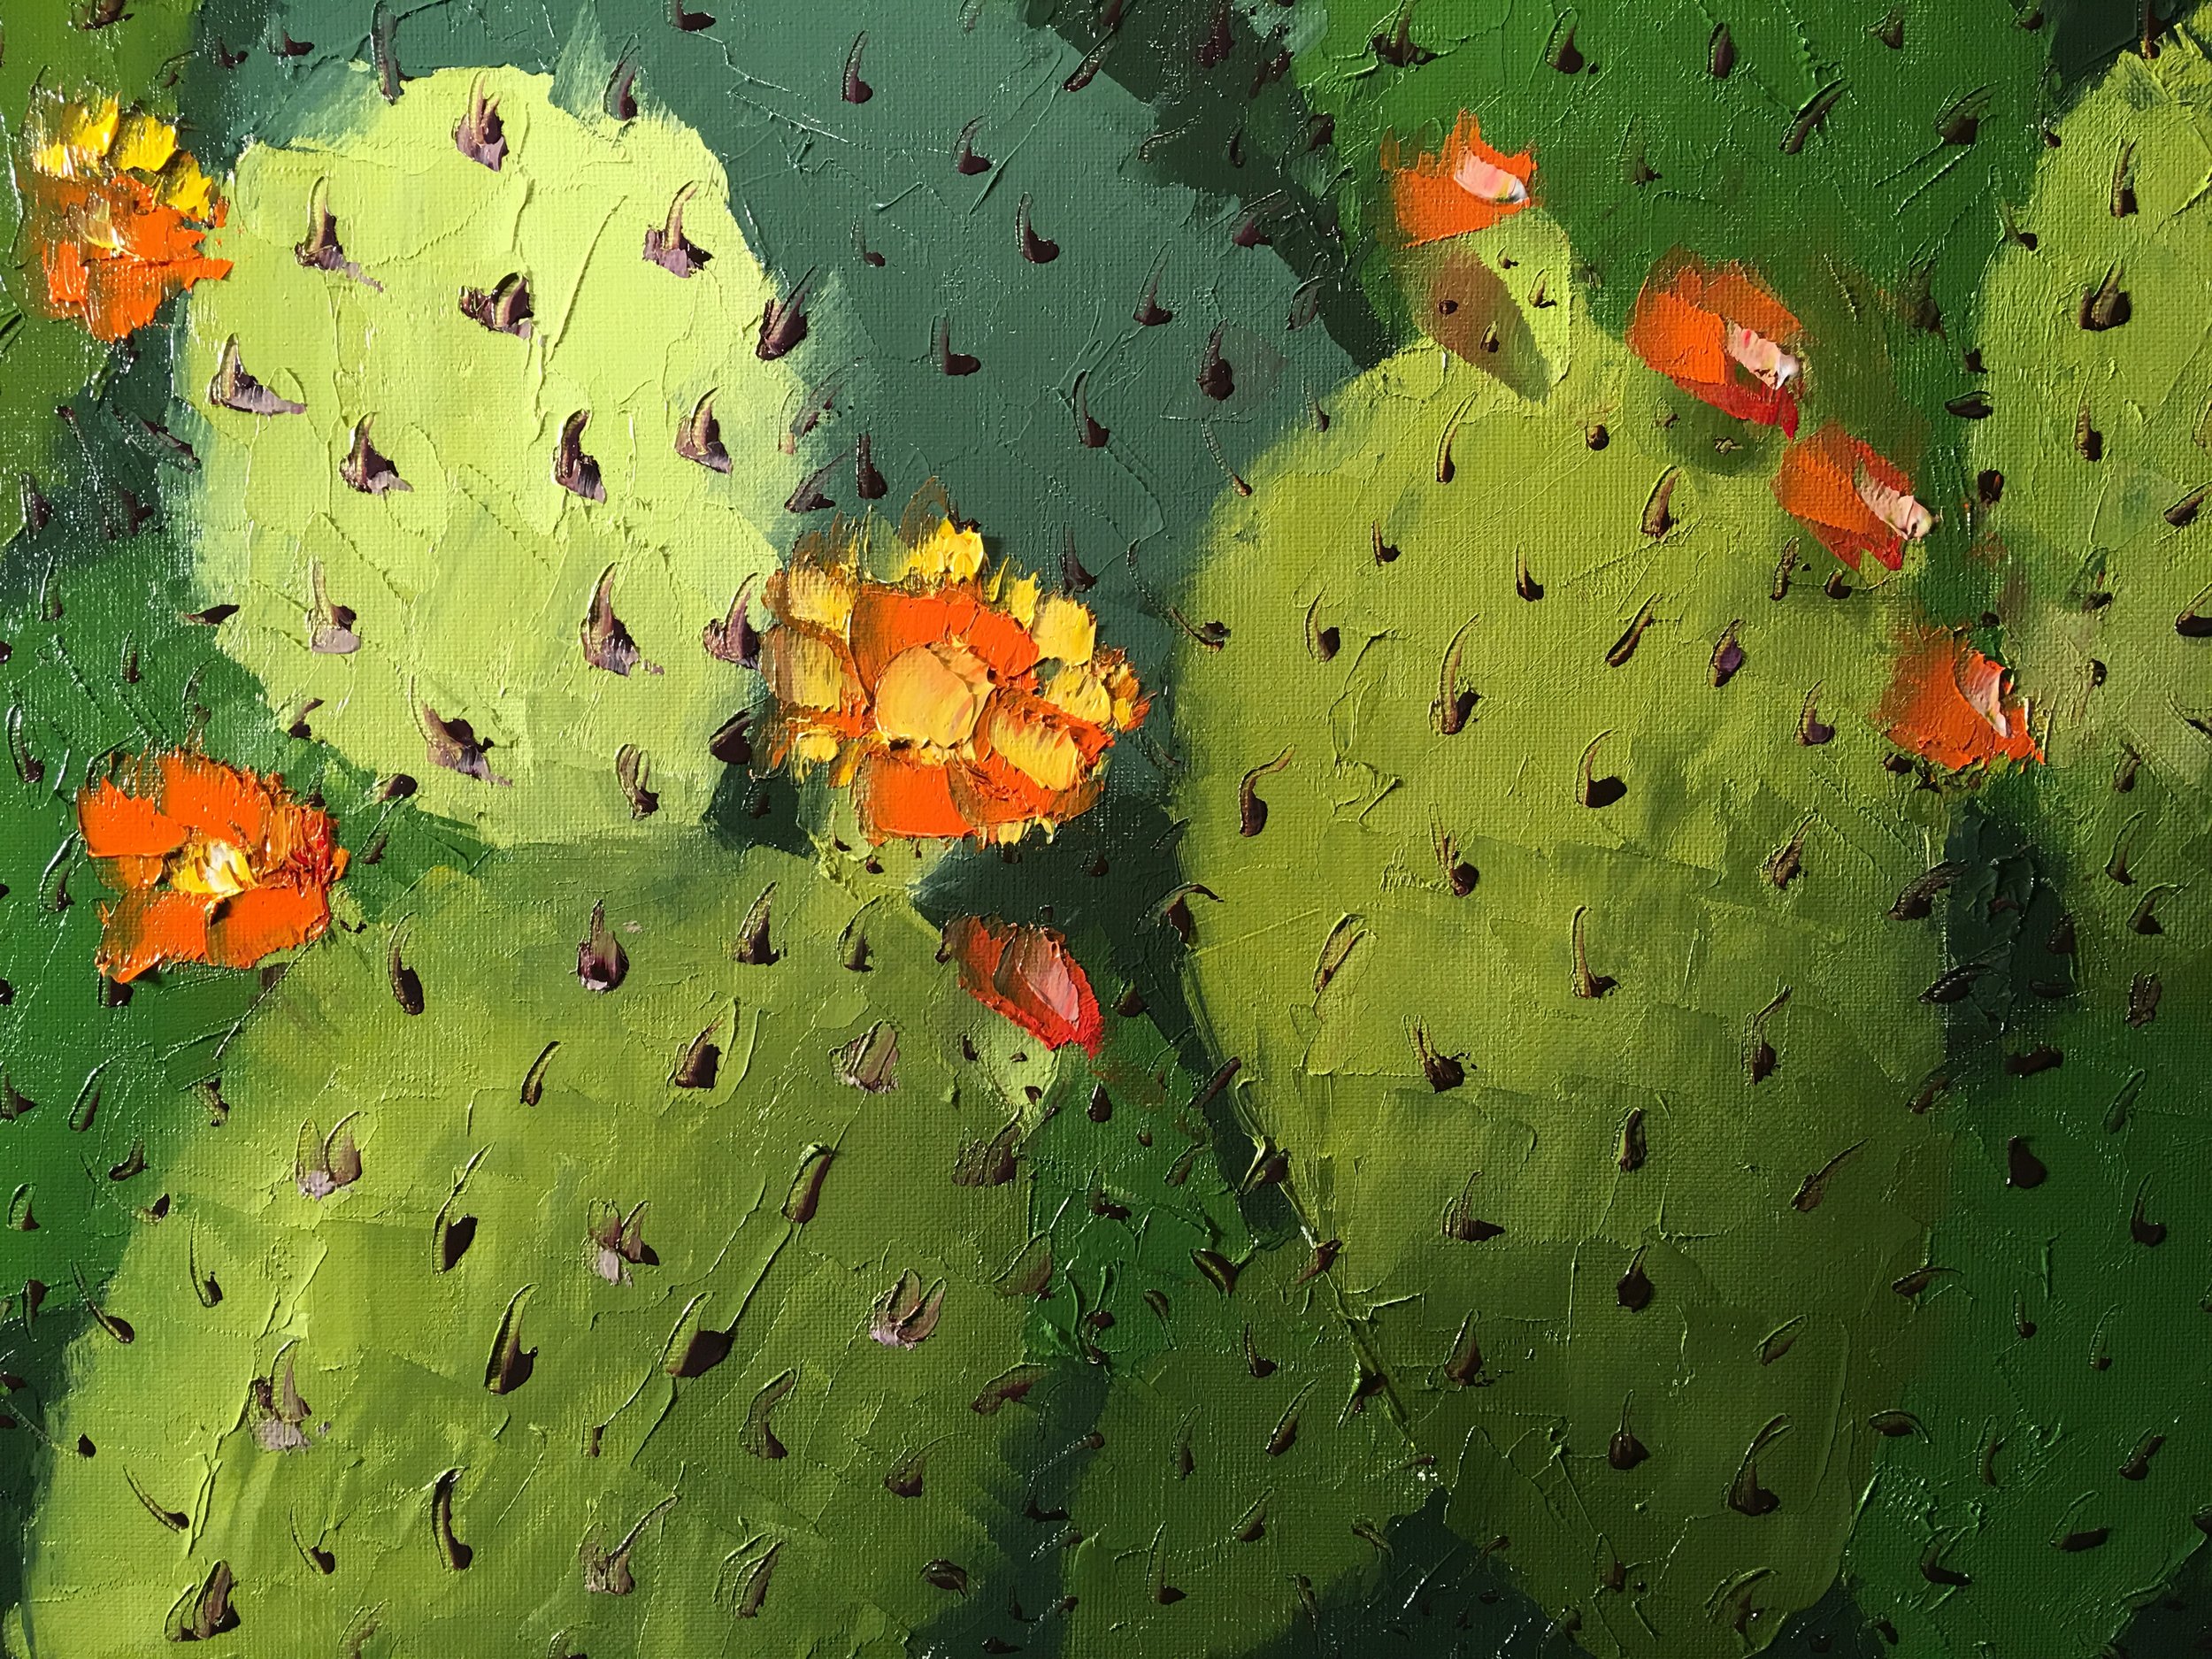 "Nopal Cactus"